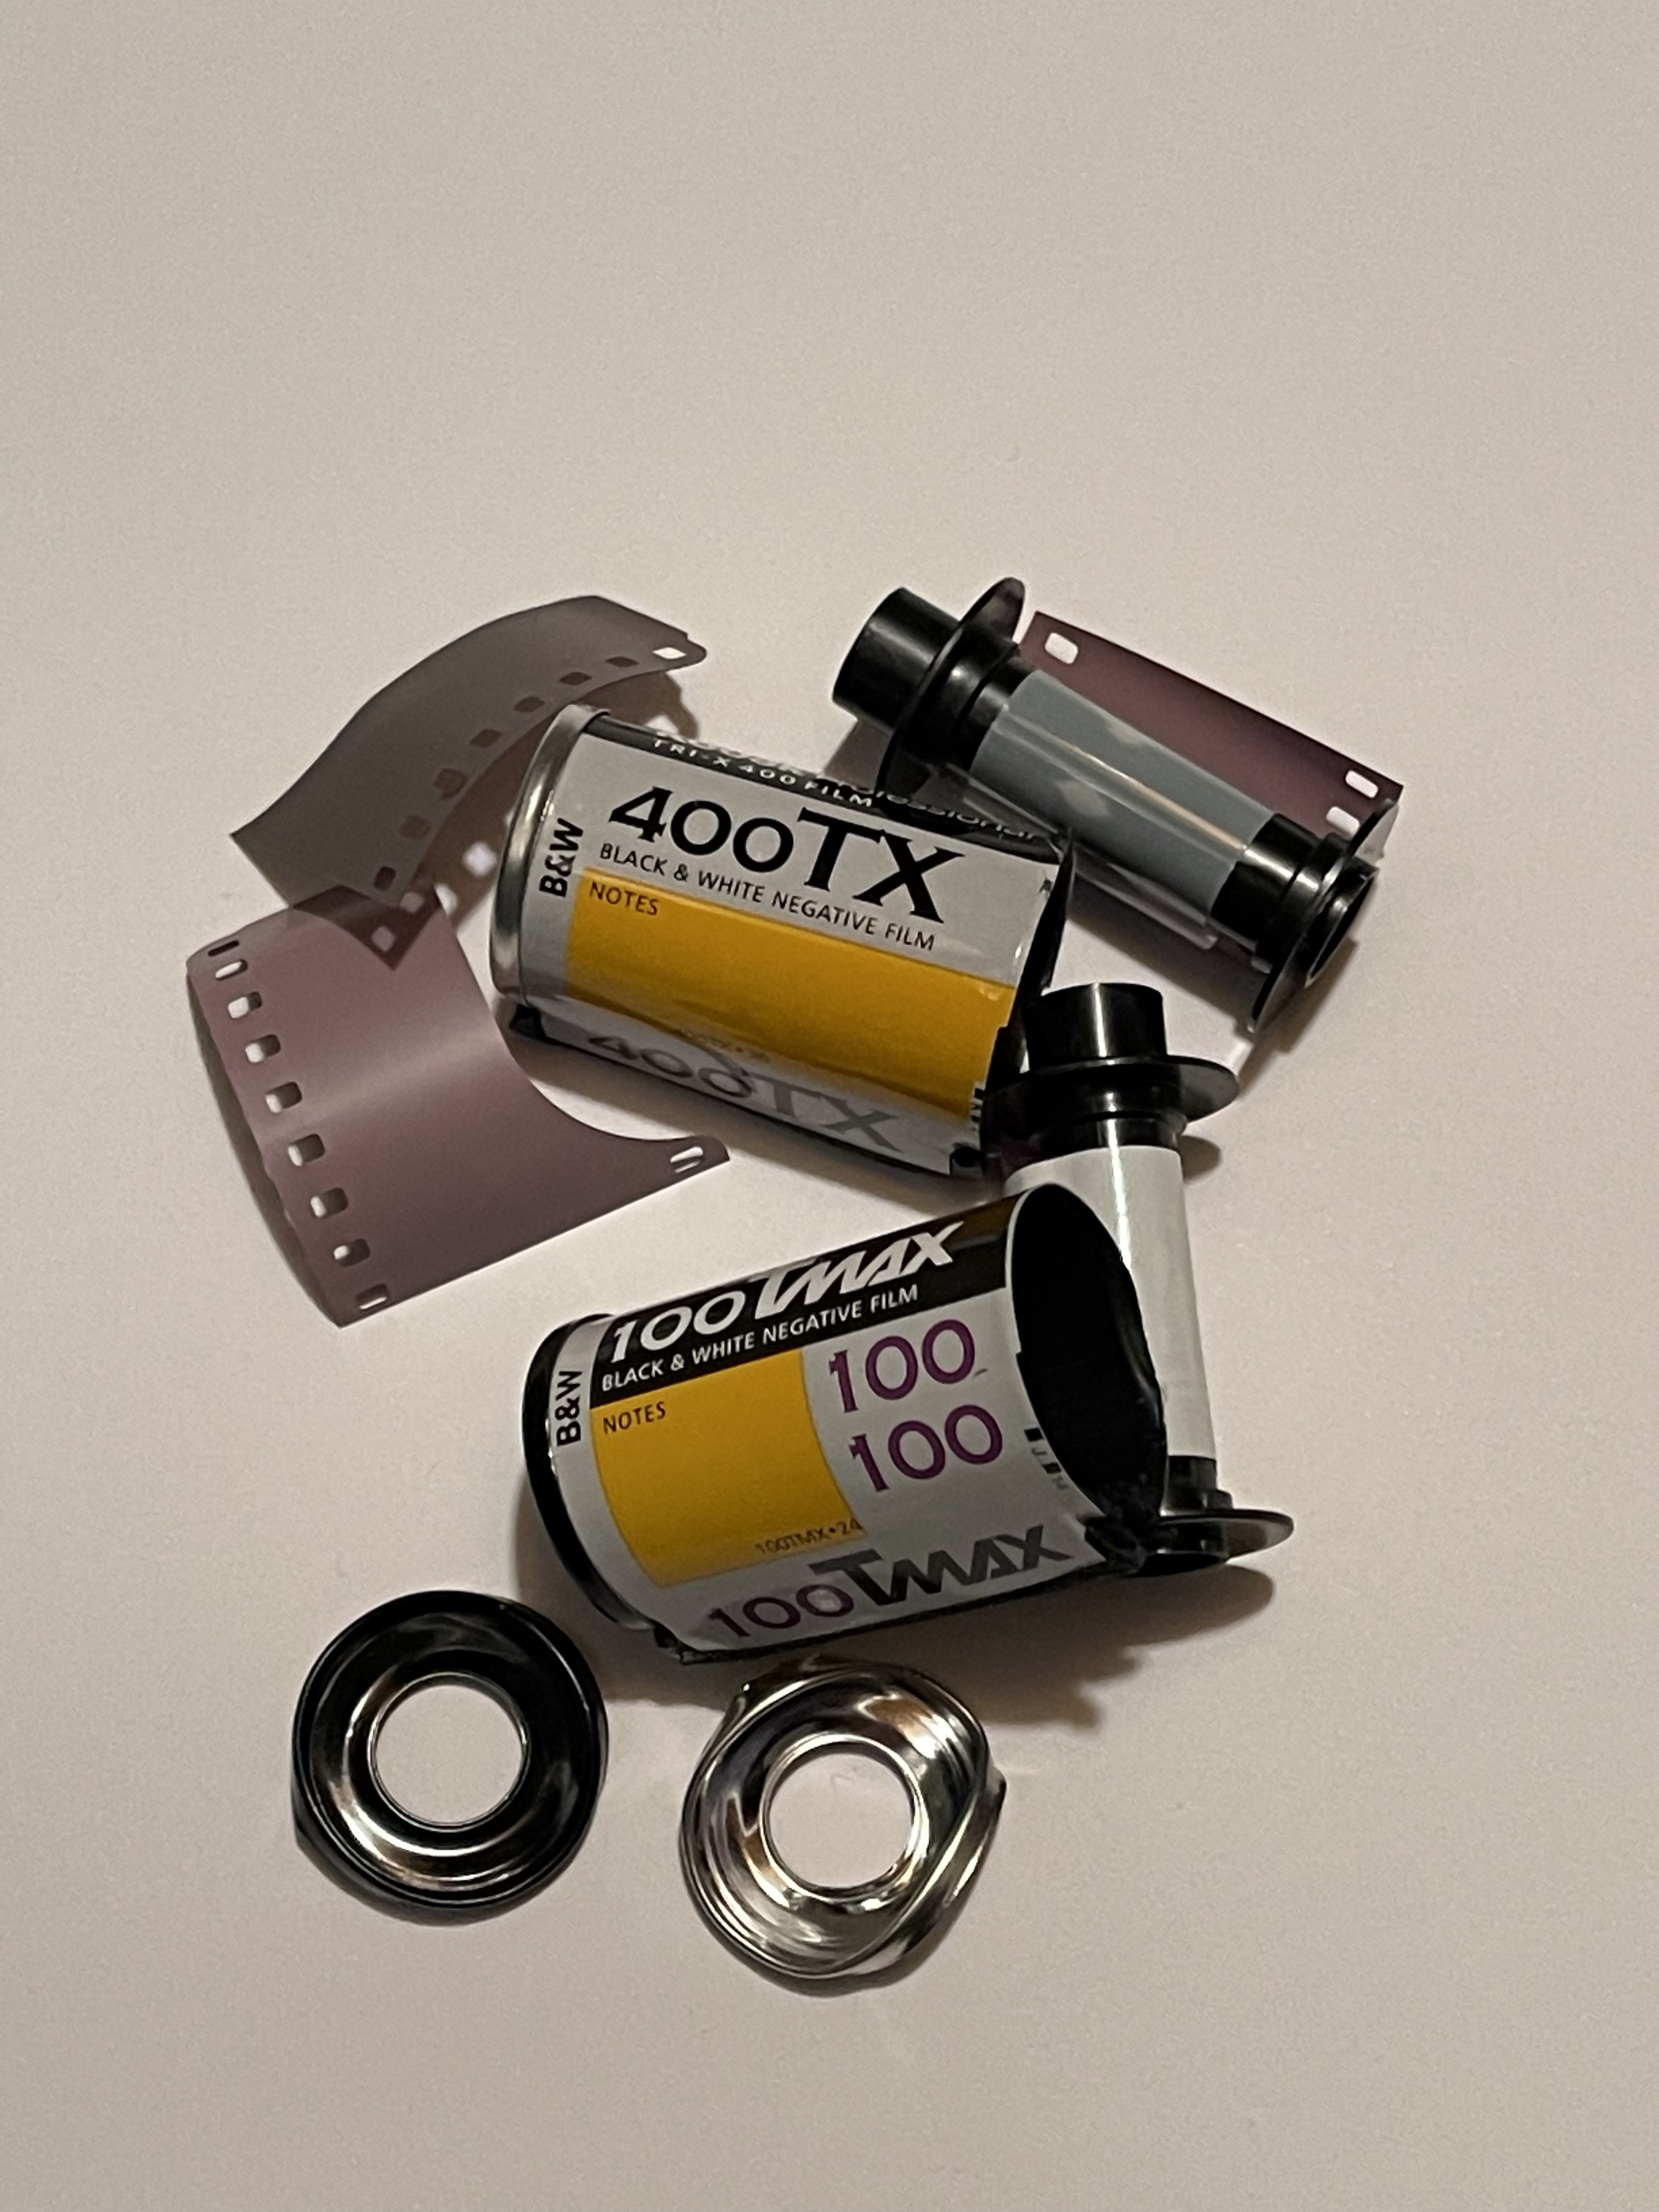 Two canisters of Kodak Tri-X 400 broken open